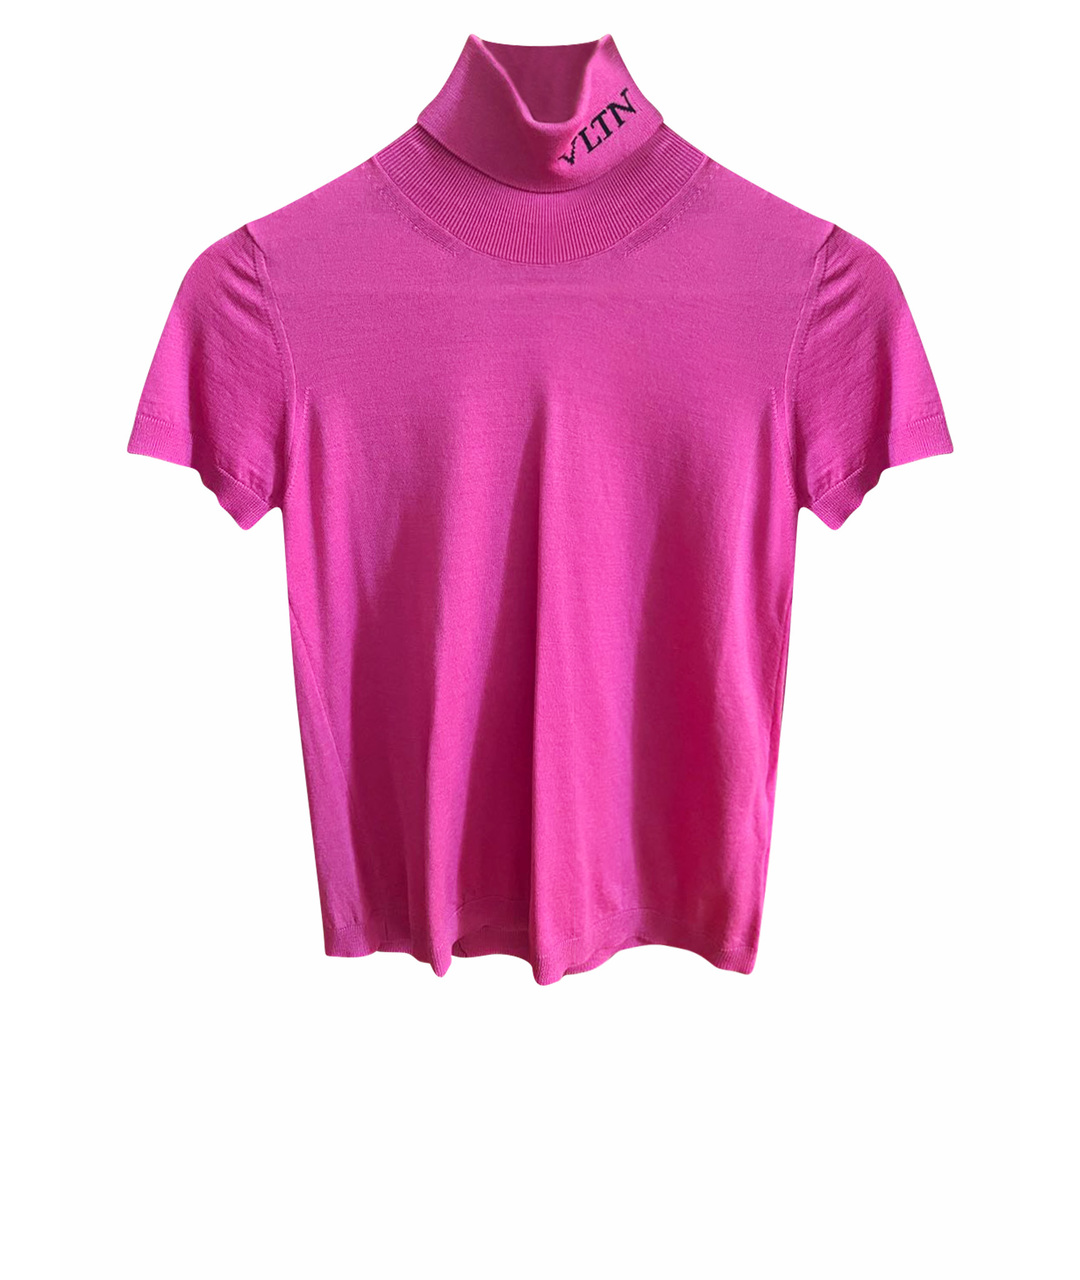 VALENTINO Розовый синтетический джемпер / свитер, фото 1